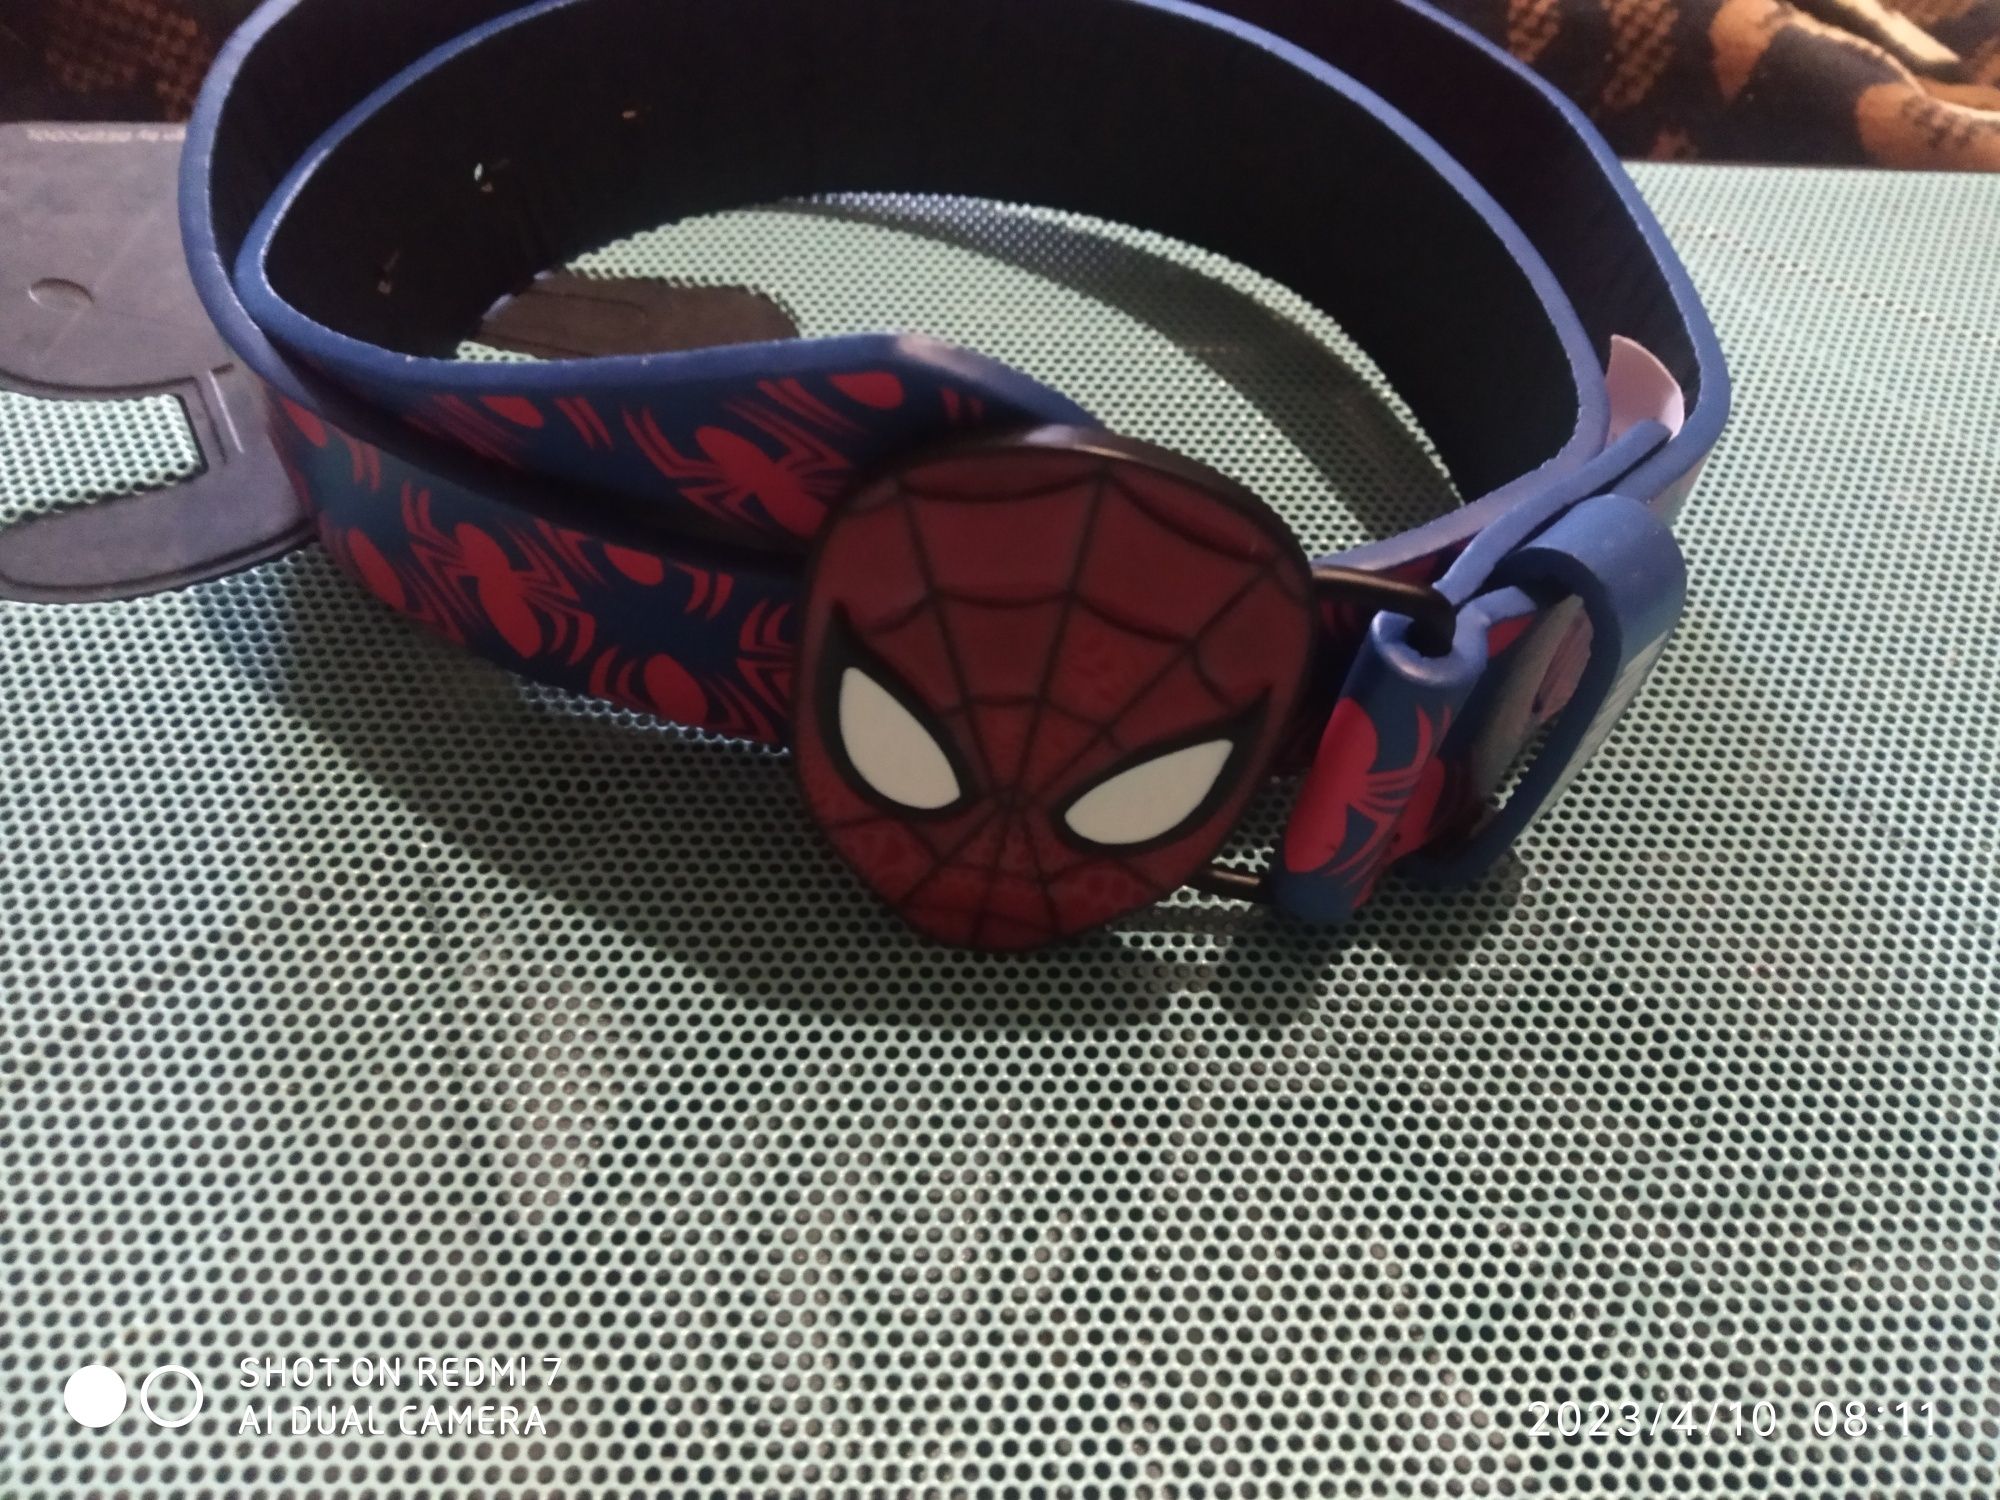 Ремень Spiderman,Marvel, 85 cm с пряжкой, ширина 3 см,б.у.